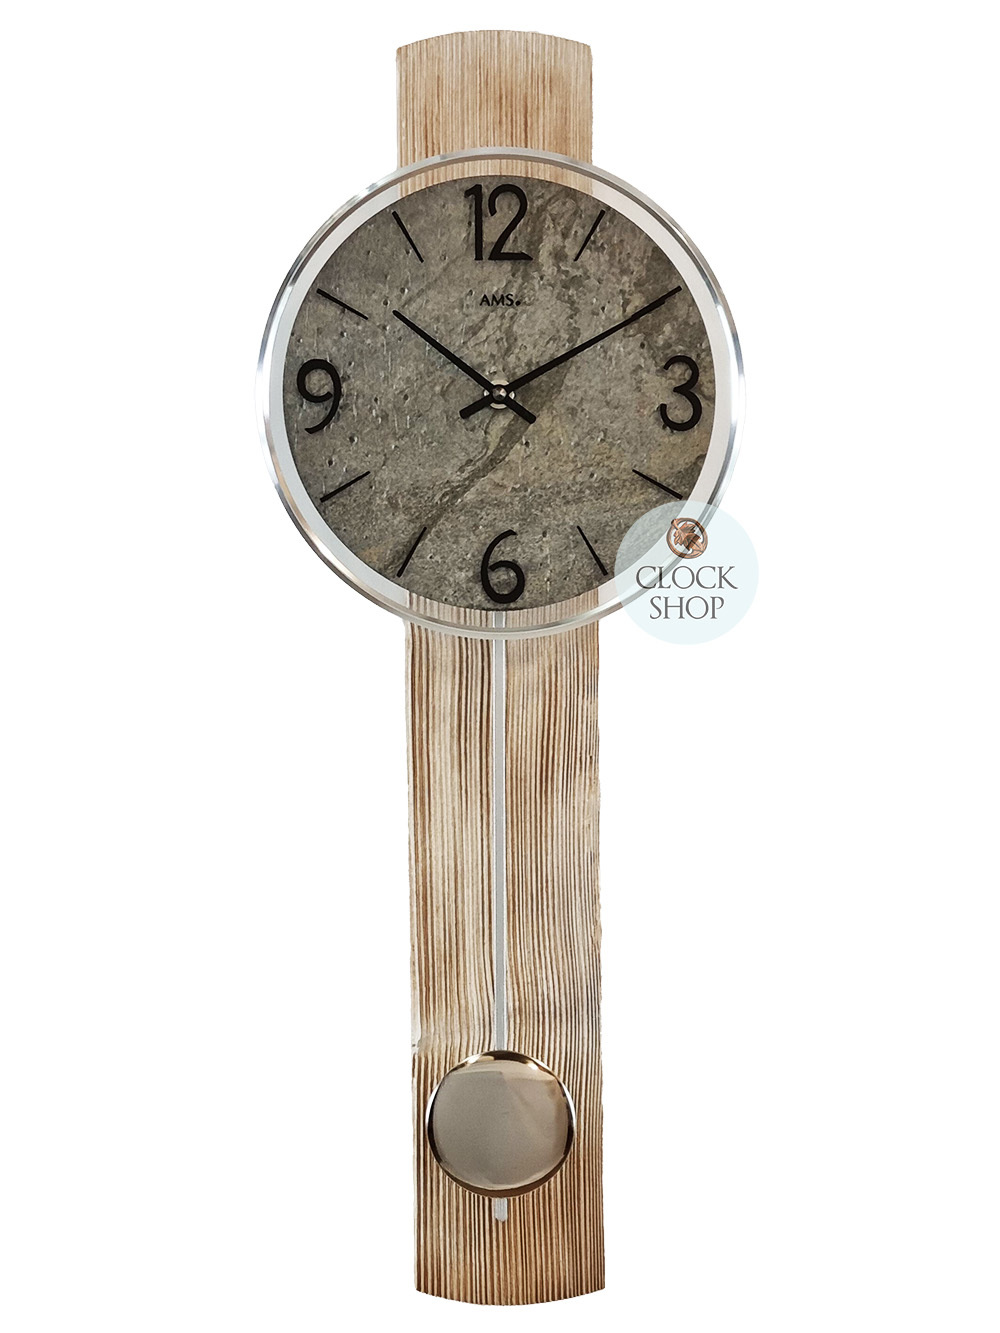 60cm Oak Pendulum Wall Grey Stone Dial By AMS - Clocks - Clock Shop